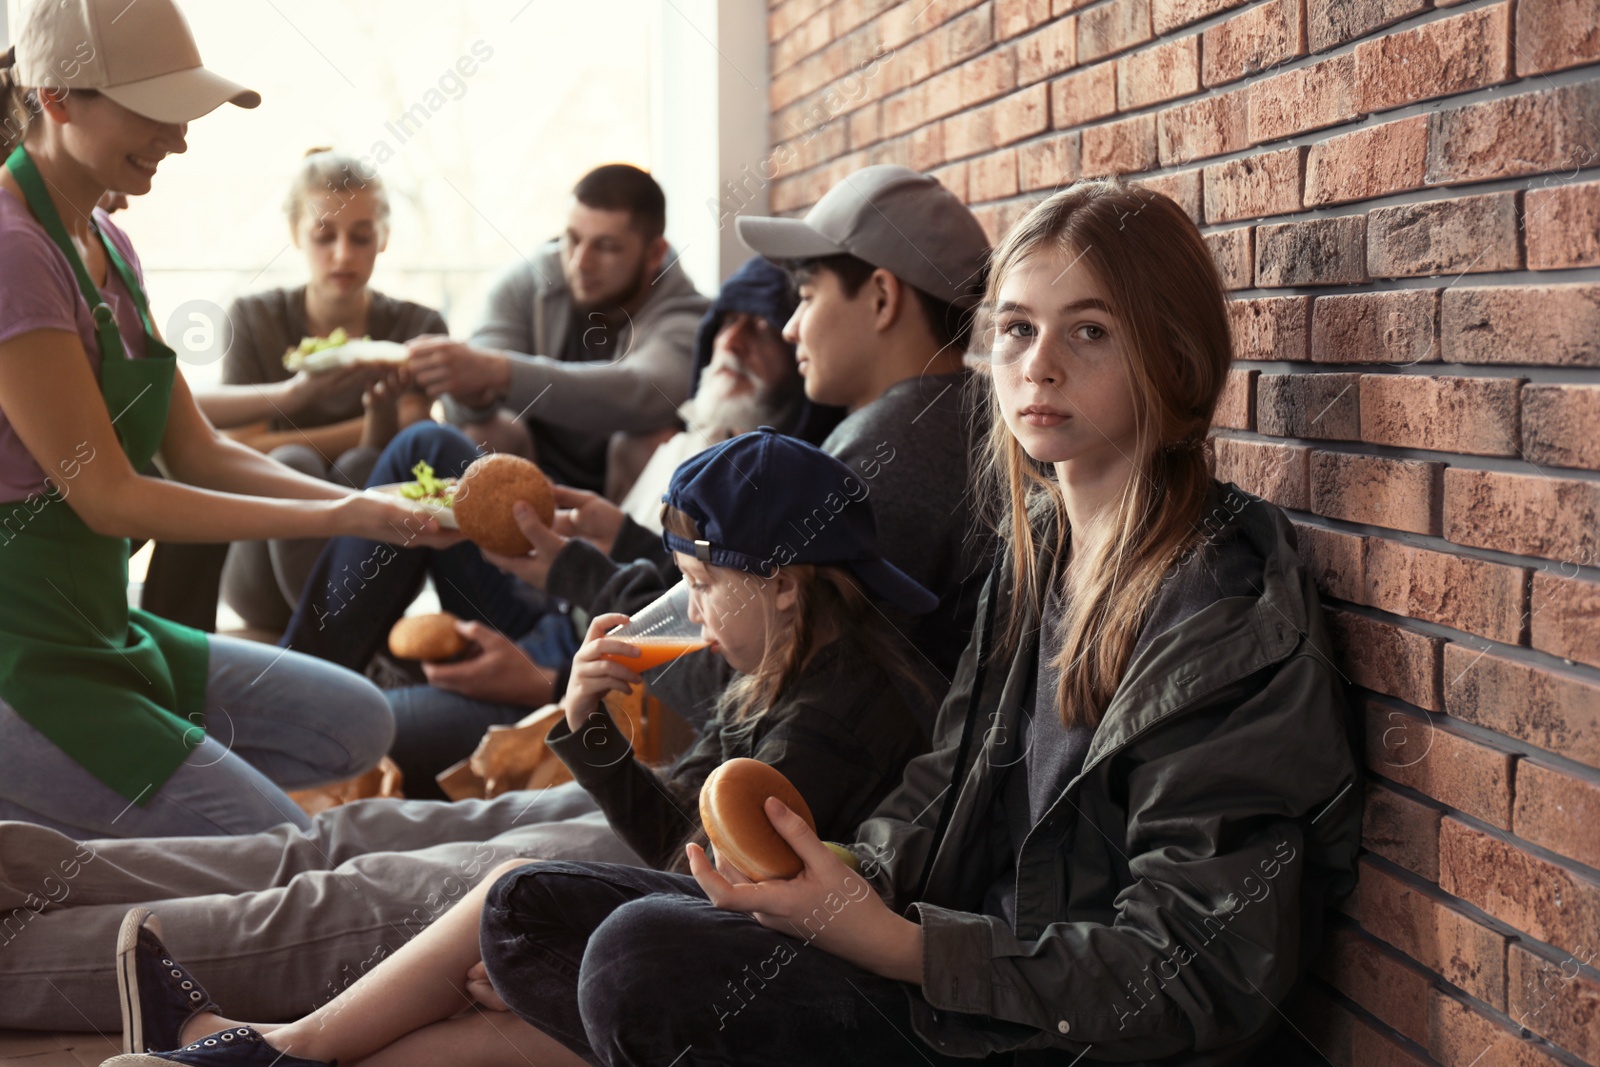 Photo of Teenage girl with other poor people receiving food from volunteers indoors